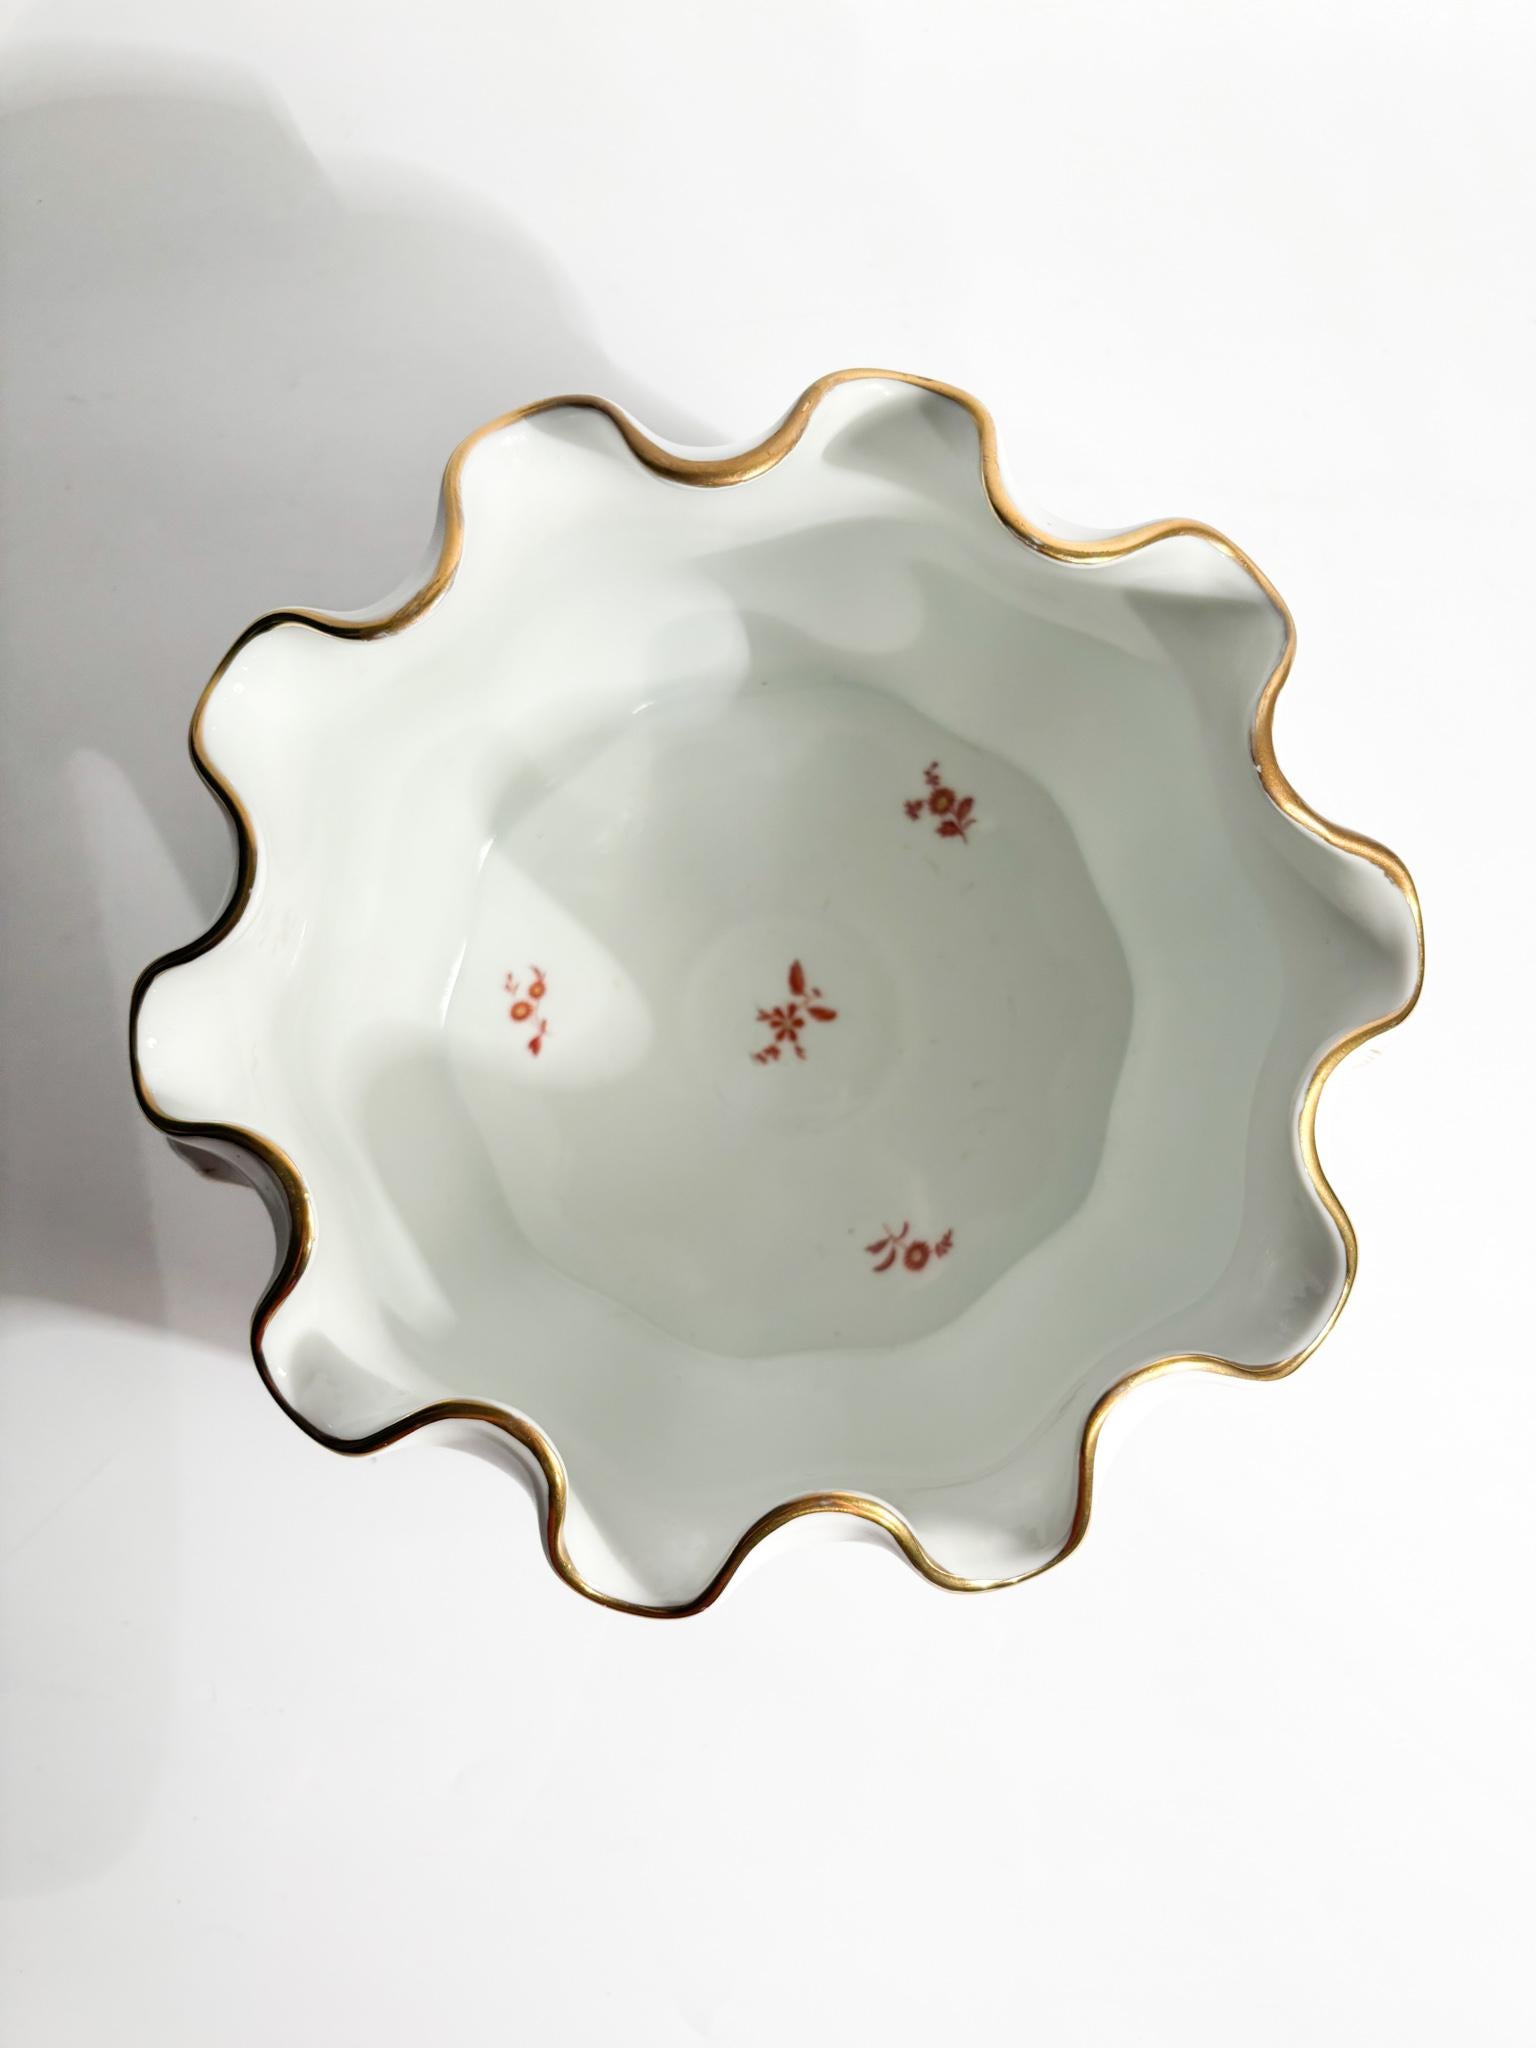 Ginori Doccia Porcelain Refresher Vase Galli Rossi Series 1950s For Sale 2